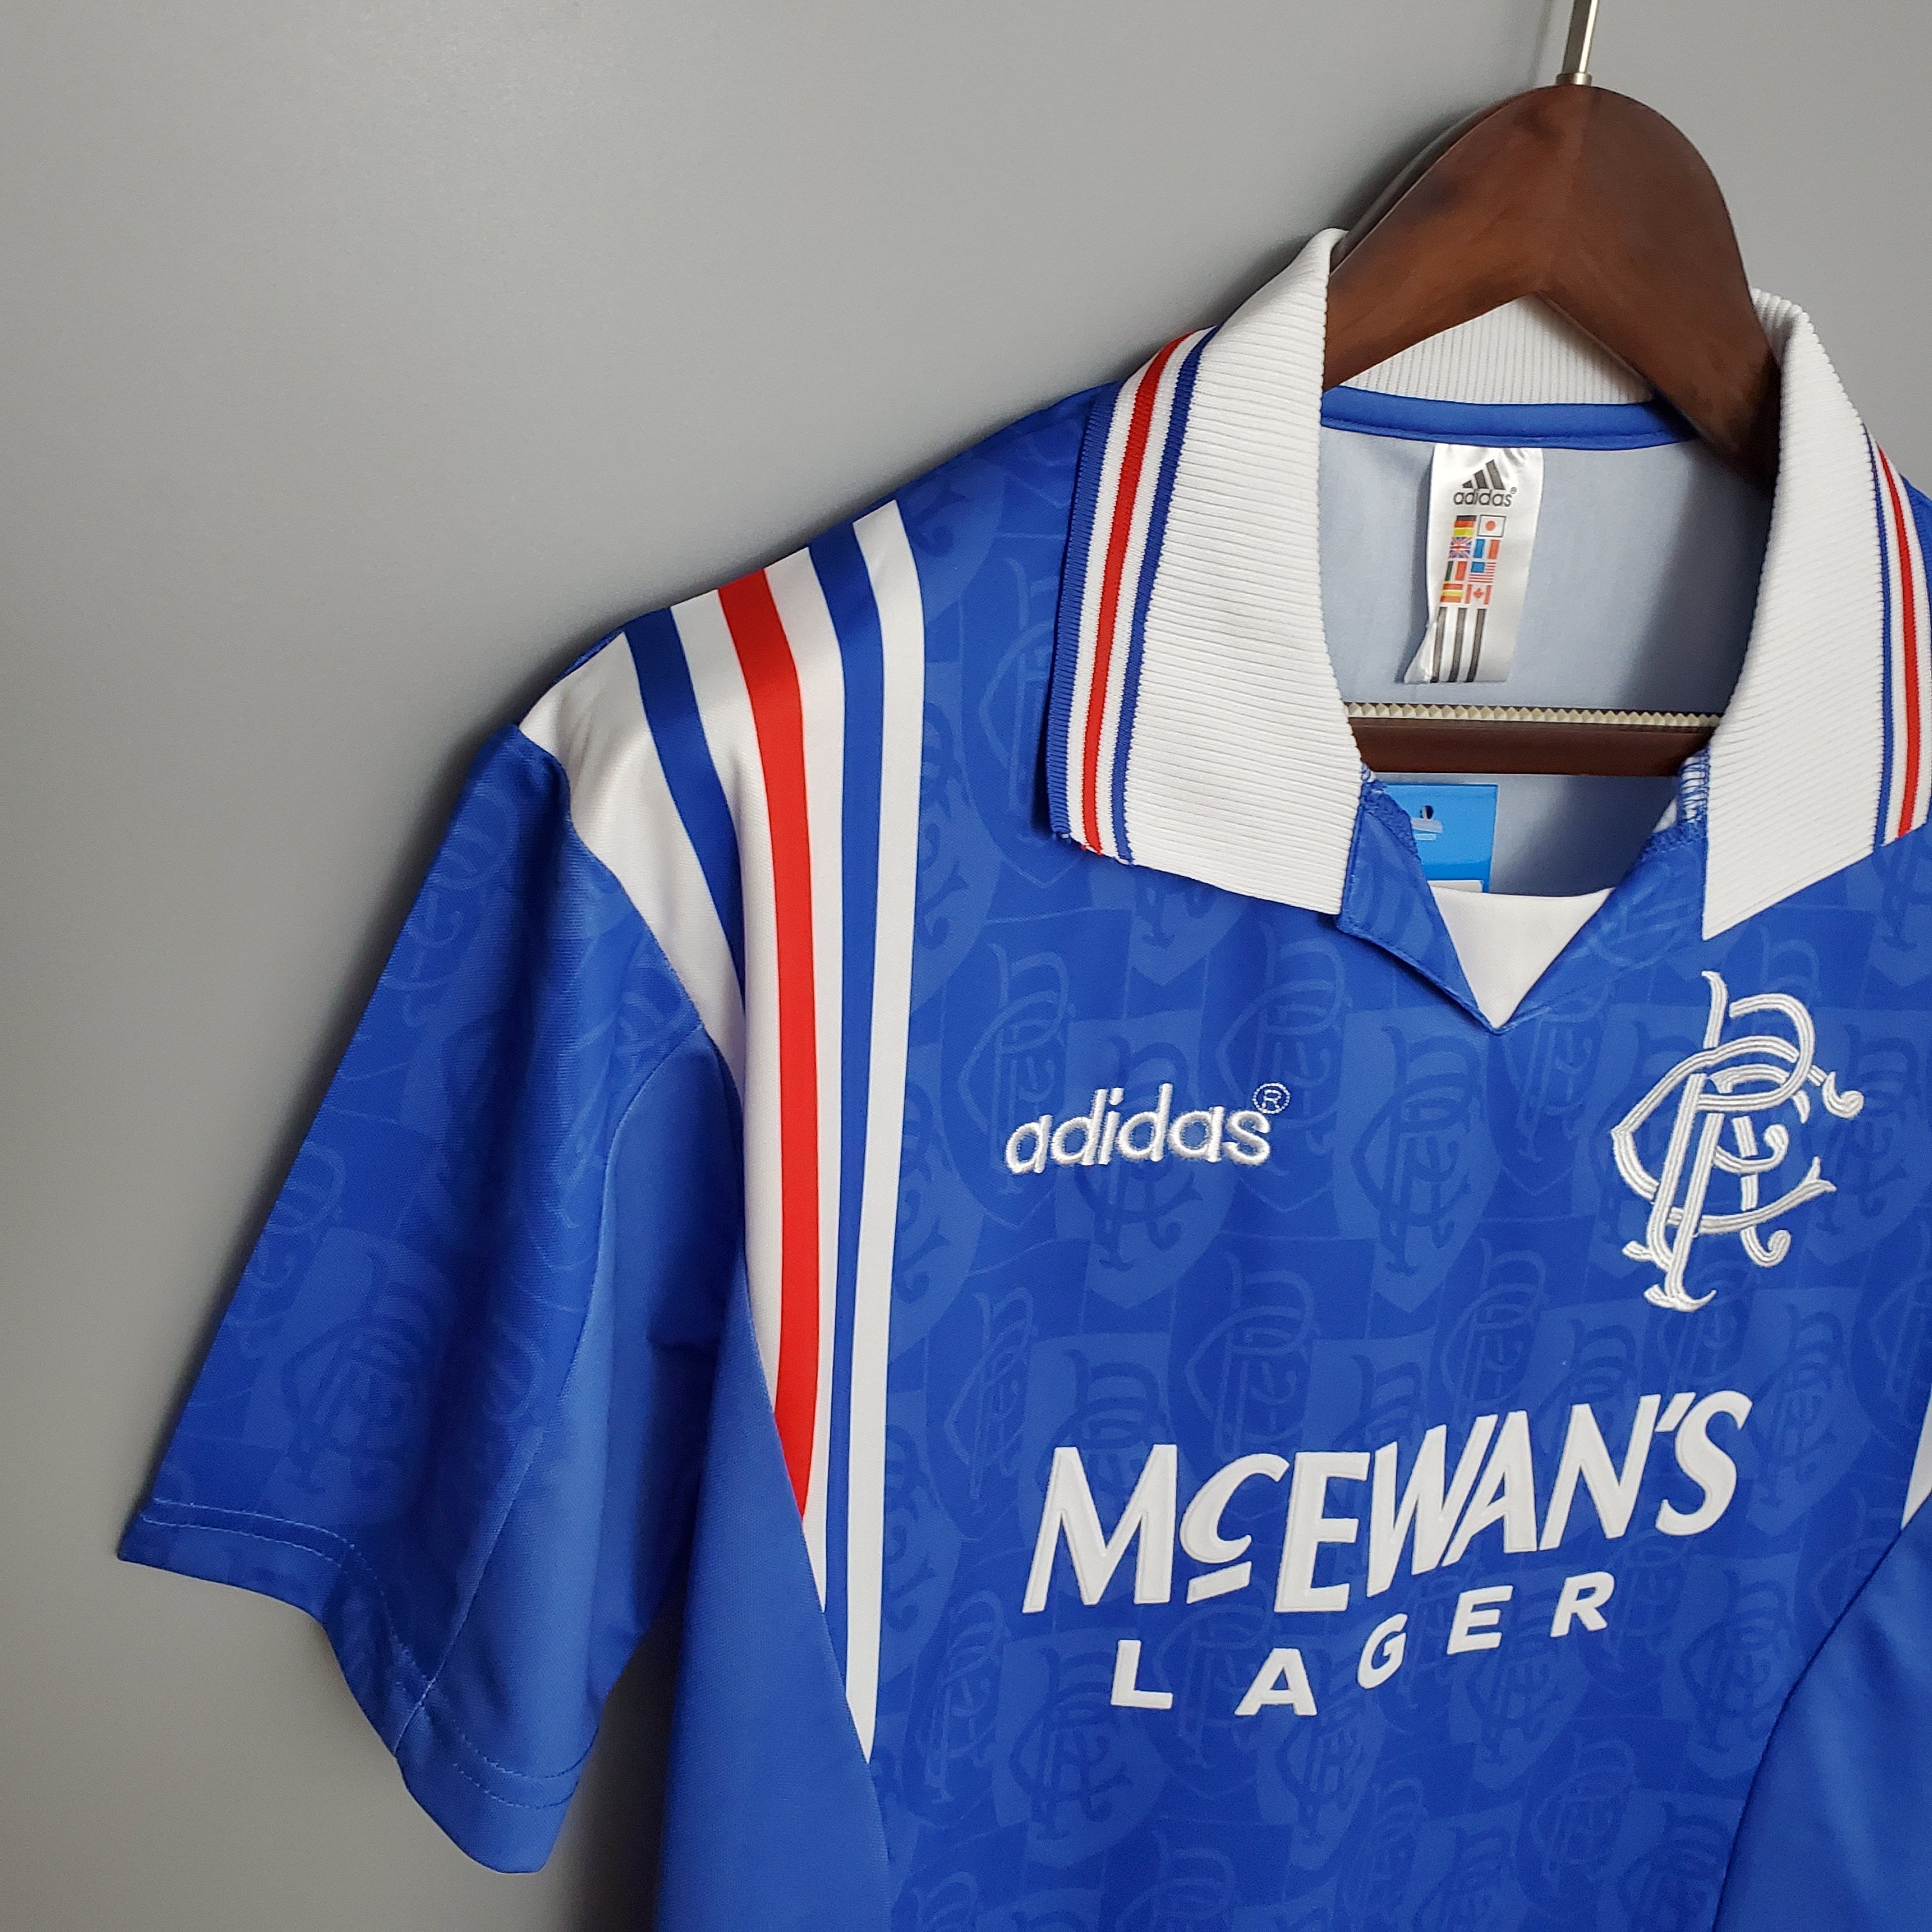 1996-97 Rangers Home Shirt - Very Good 6/10 - (Infant)